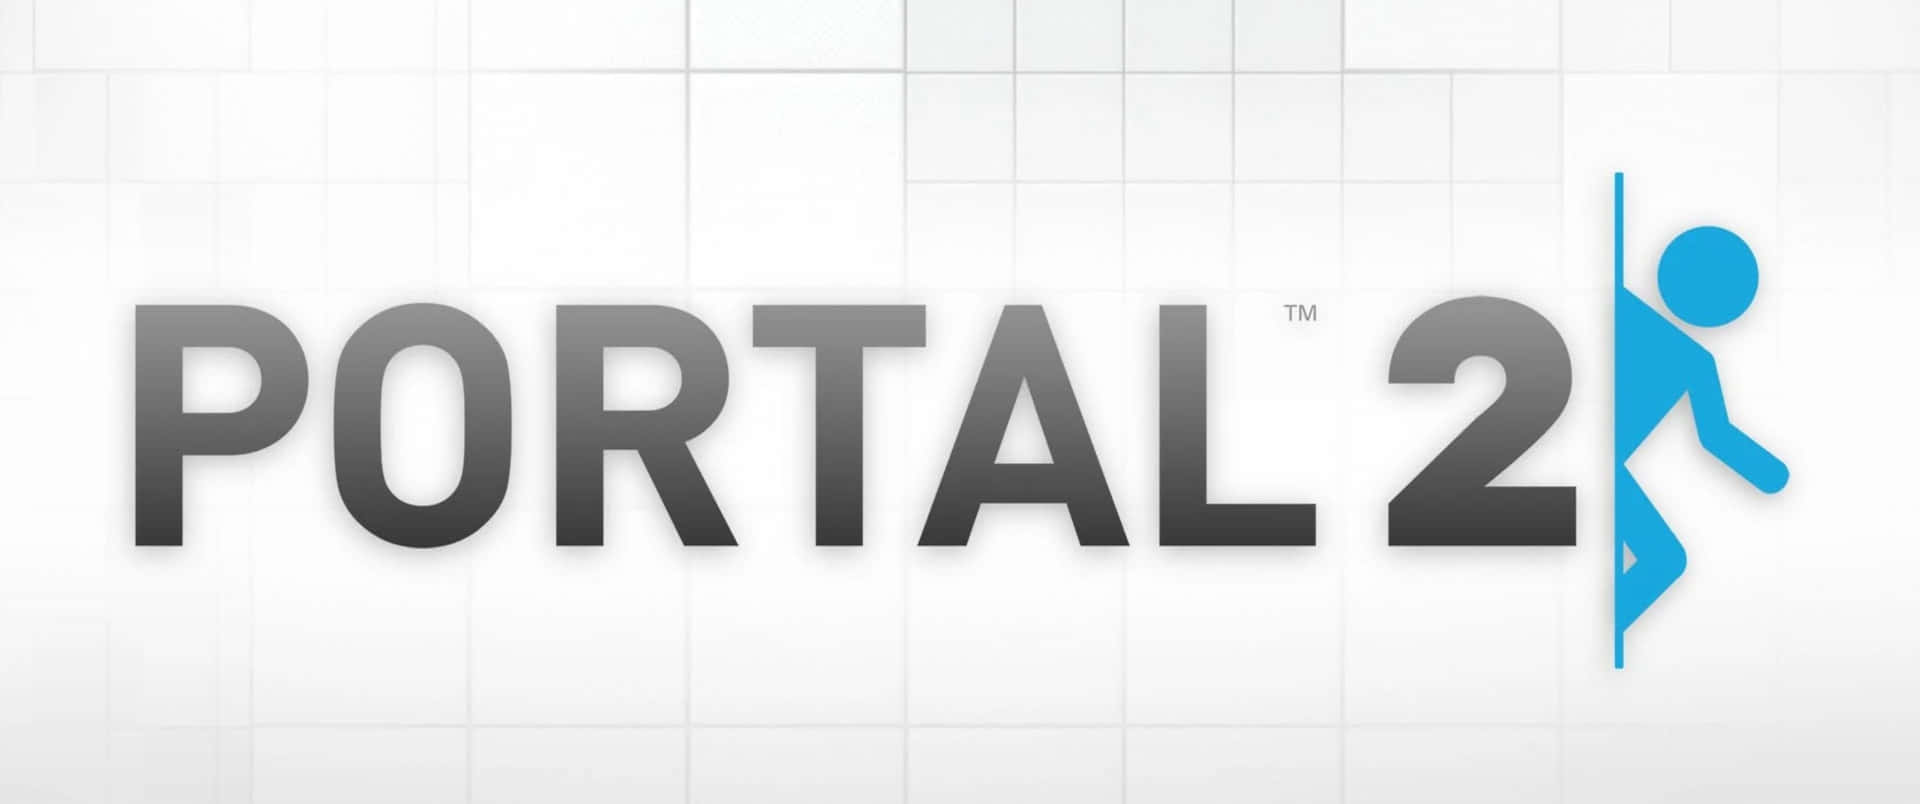 Portal2 I All Sin Prakt.